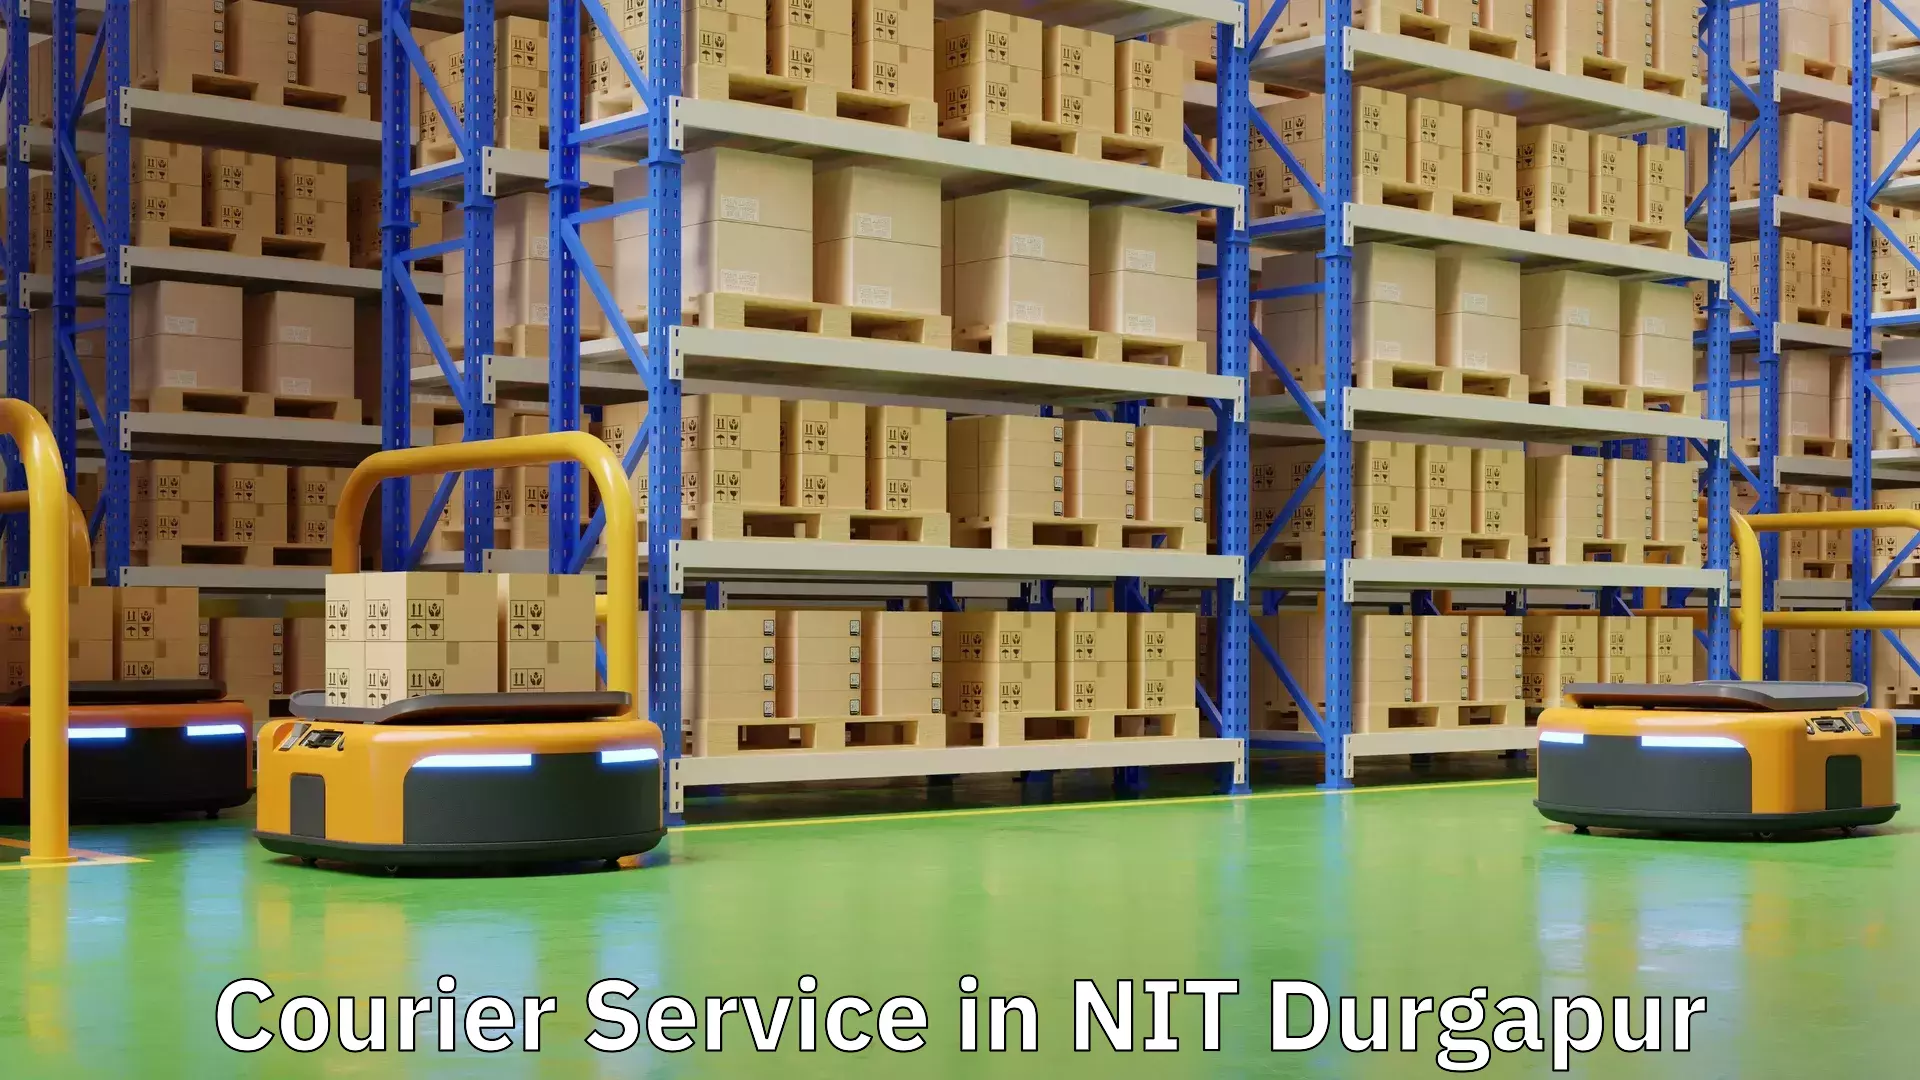 High-priority parcel service in NIT Durgapur